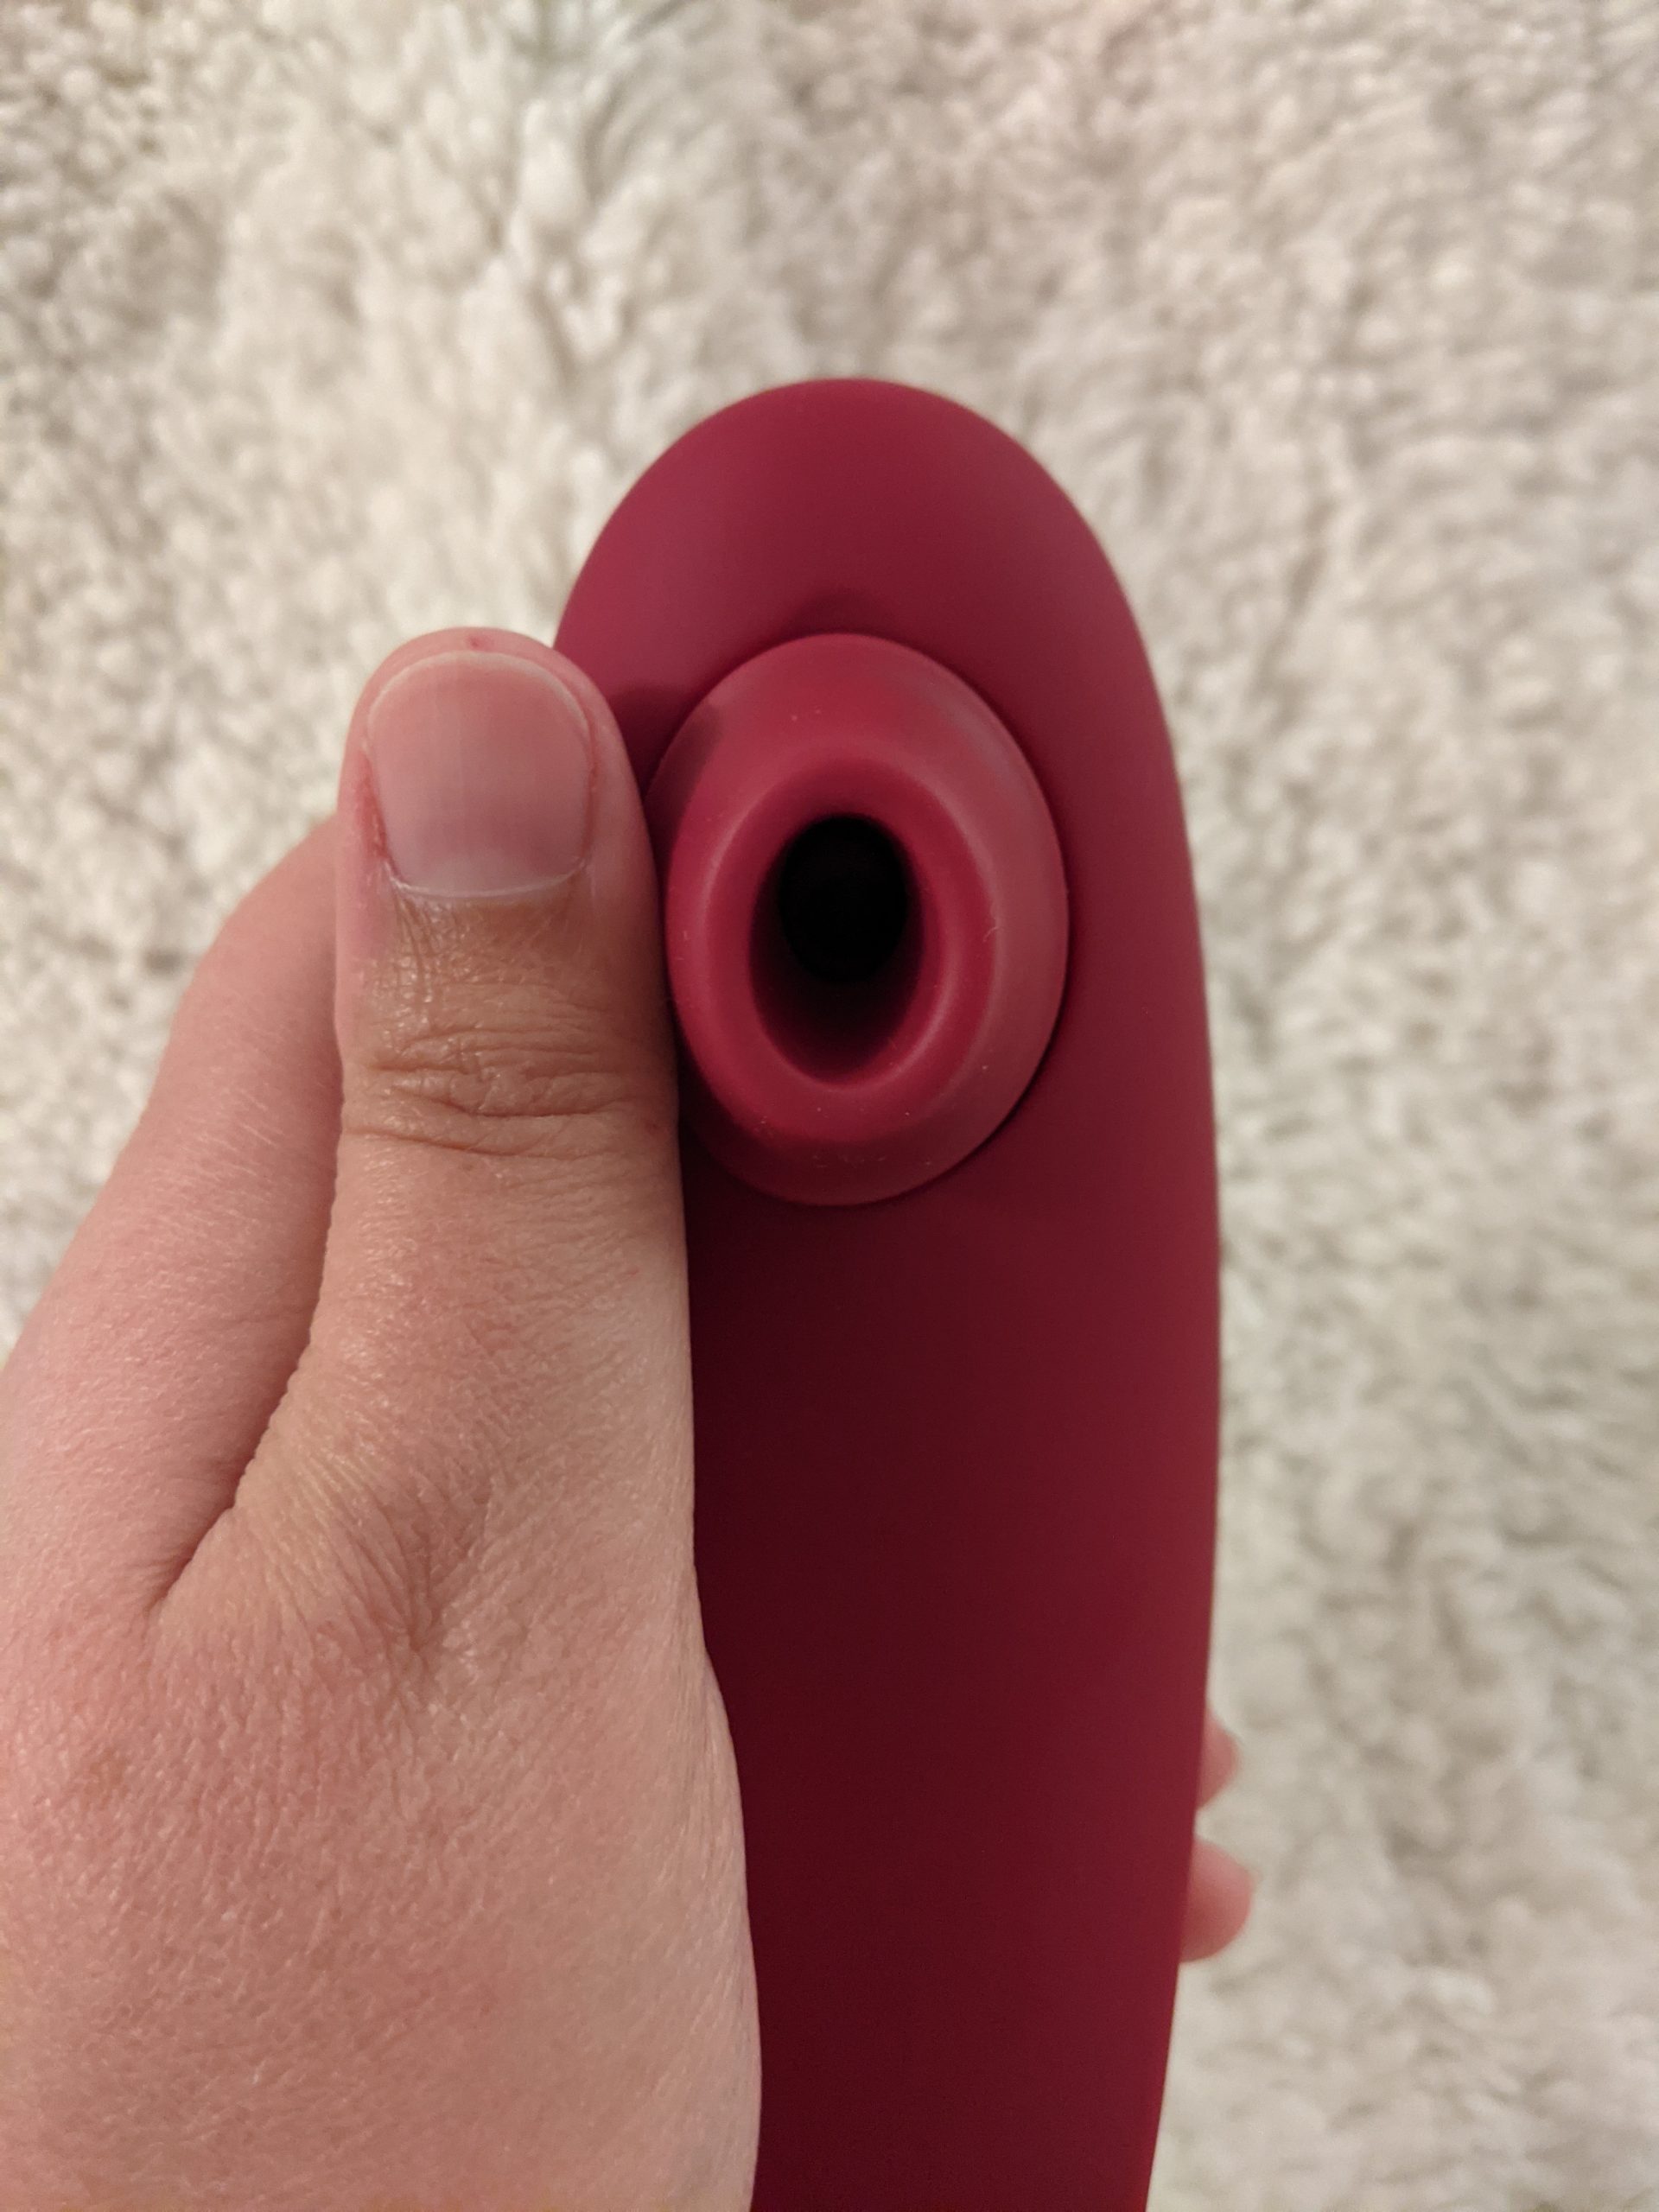 Nozzle next to thumb